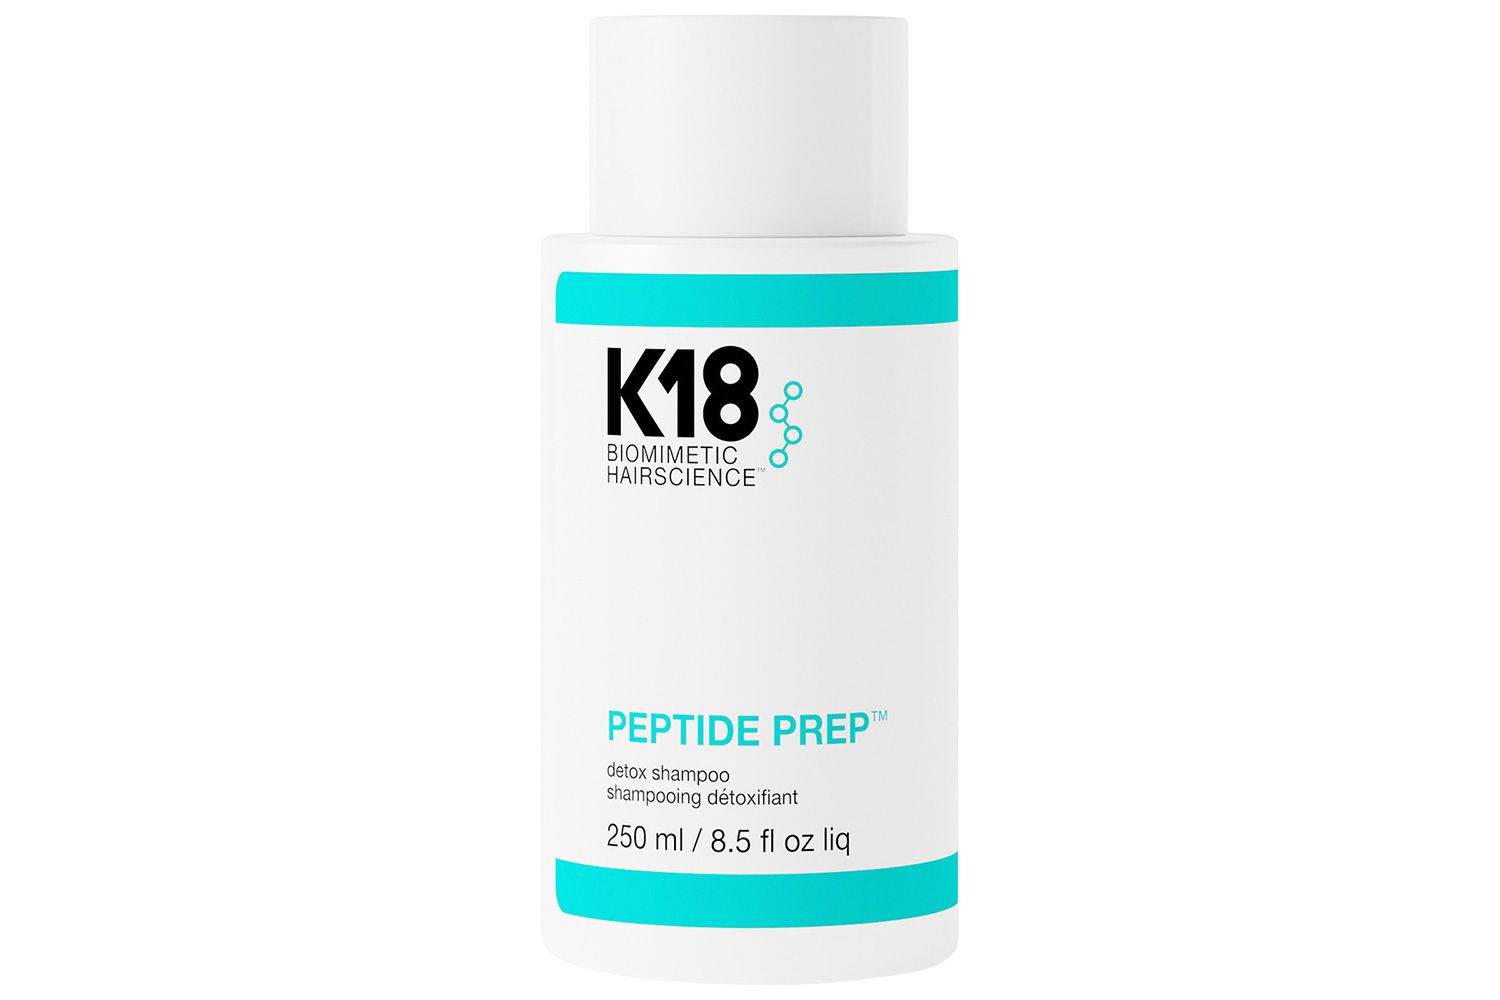 Sephora K18 Biomimetic Hairscience PEPTIDE PREPâ¢ Clarifying Detox Shampoo